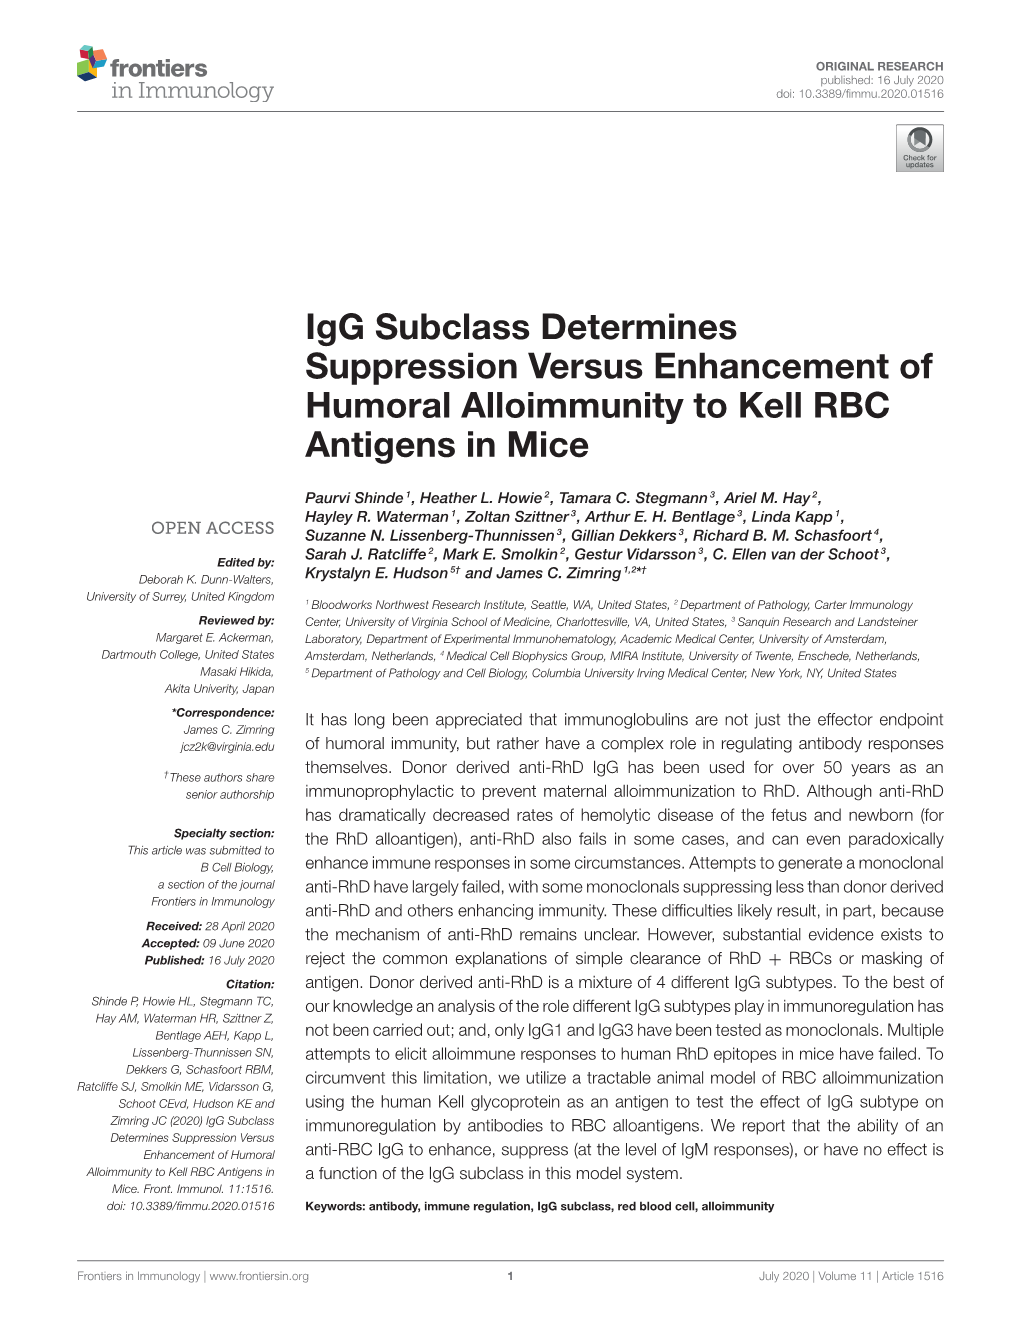 Igg Subclass Determines Suppression Versus Enhancement of Humoral Alloimmunity to Kell RBC Antigens in Mice